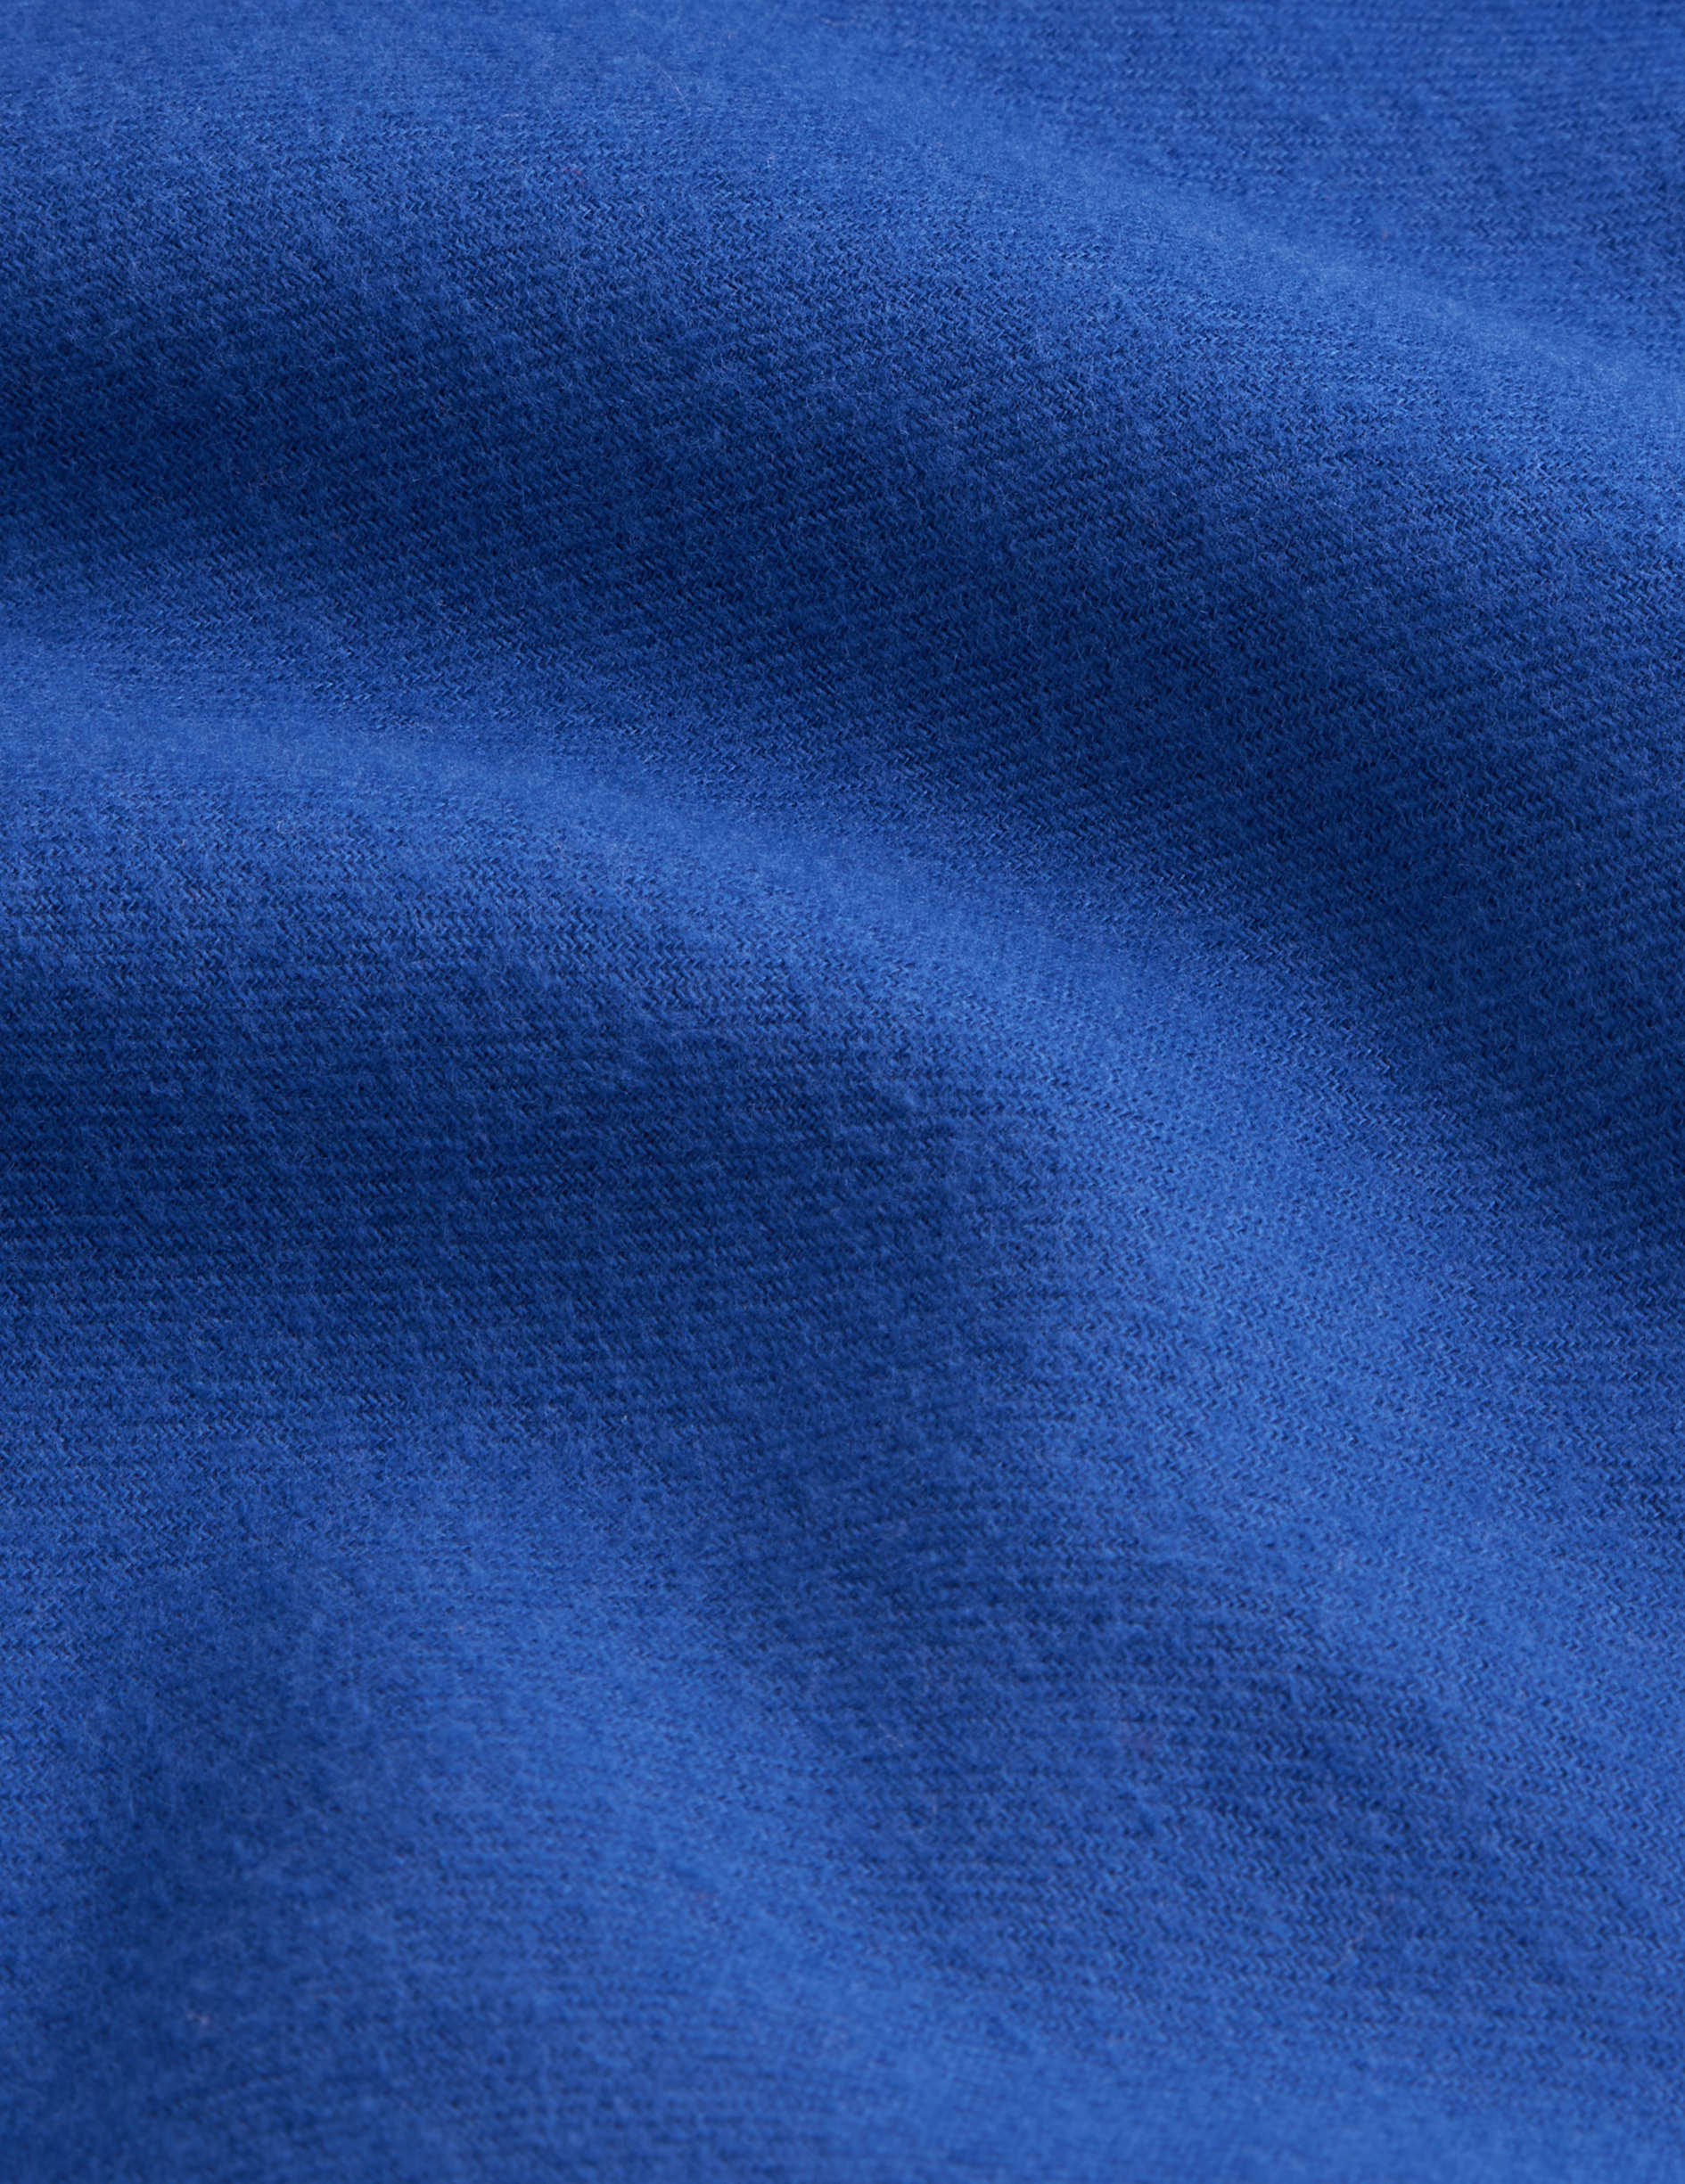 Blue aristote shirt - Flannel - Italian Collar